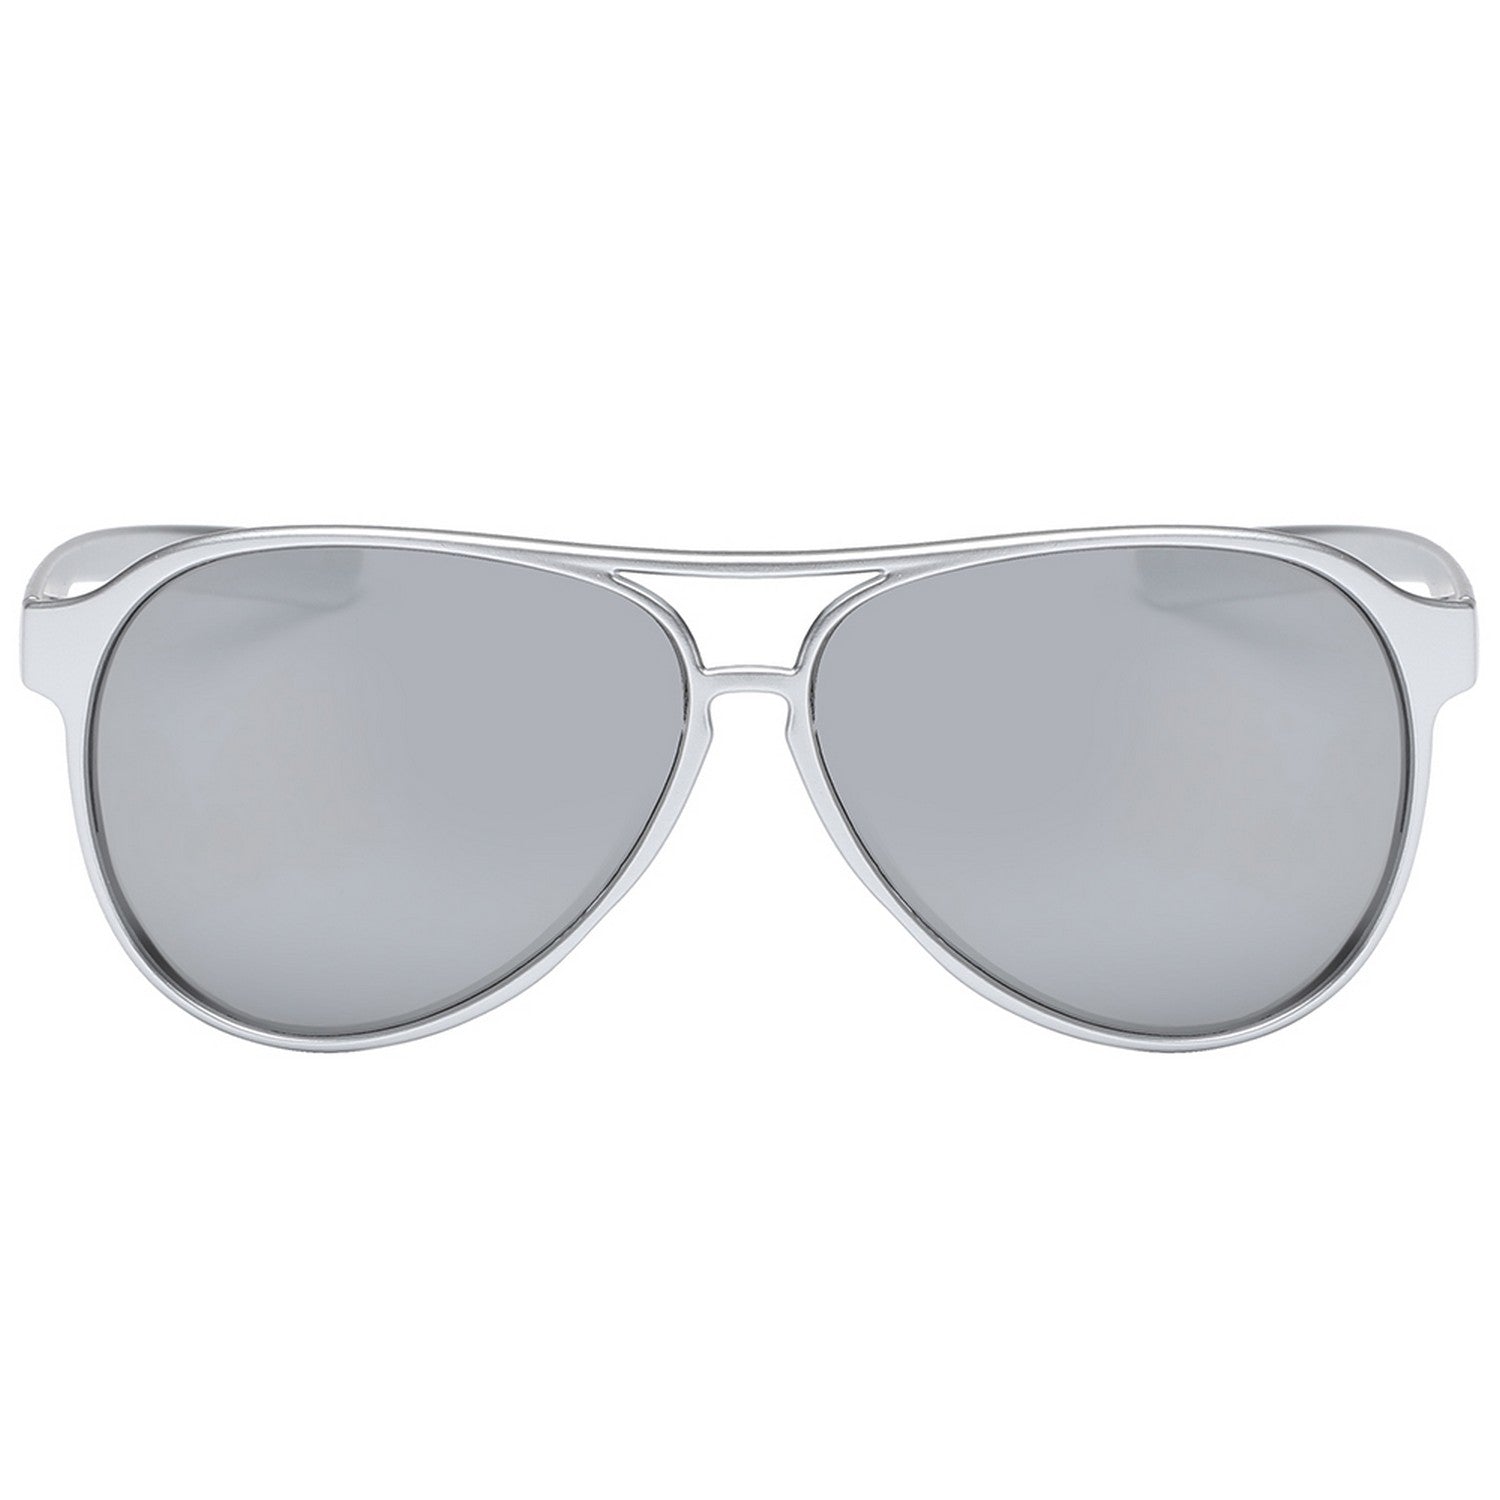 Polarspex Polarized Classic Ultar Lightweight Aviator Pilot Sunglasses with Titanium Silver Frames and Polarized Ice Tech Lenses for Men and Women